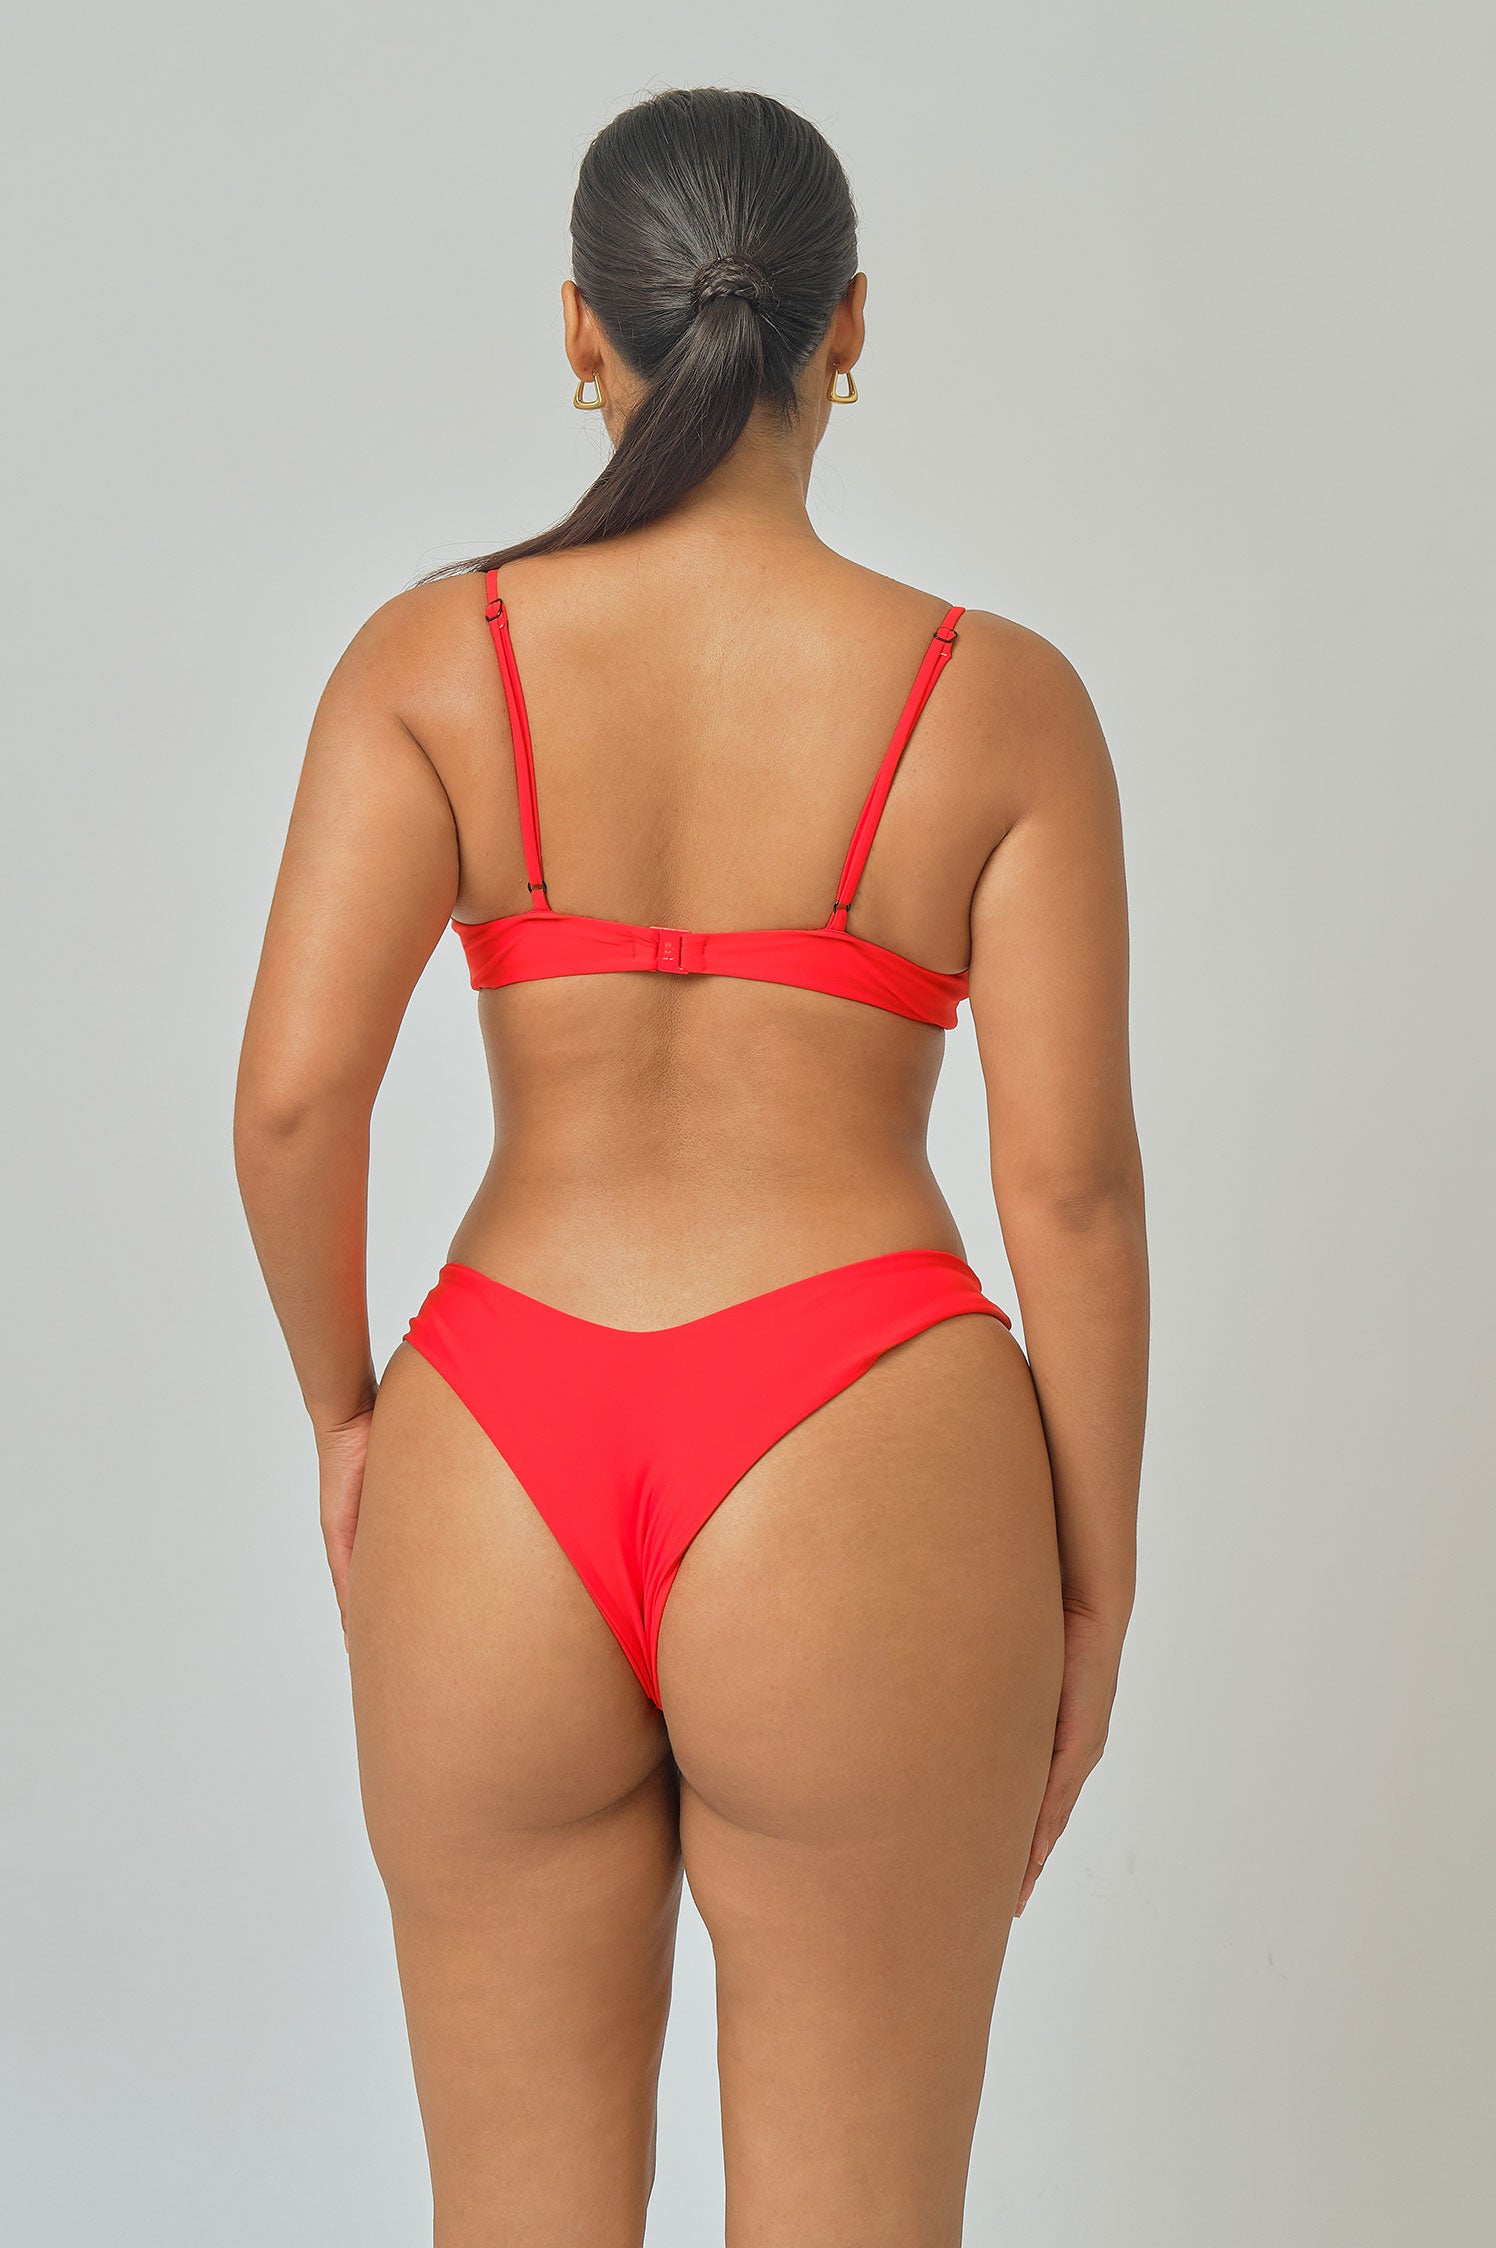 Willow Top / Red - Bikinis & Beachwear | Blackbough Swim